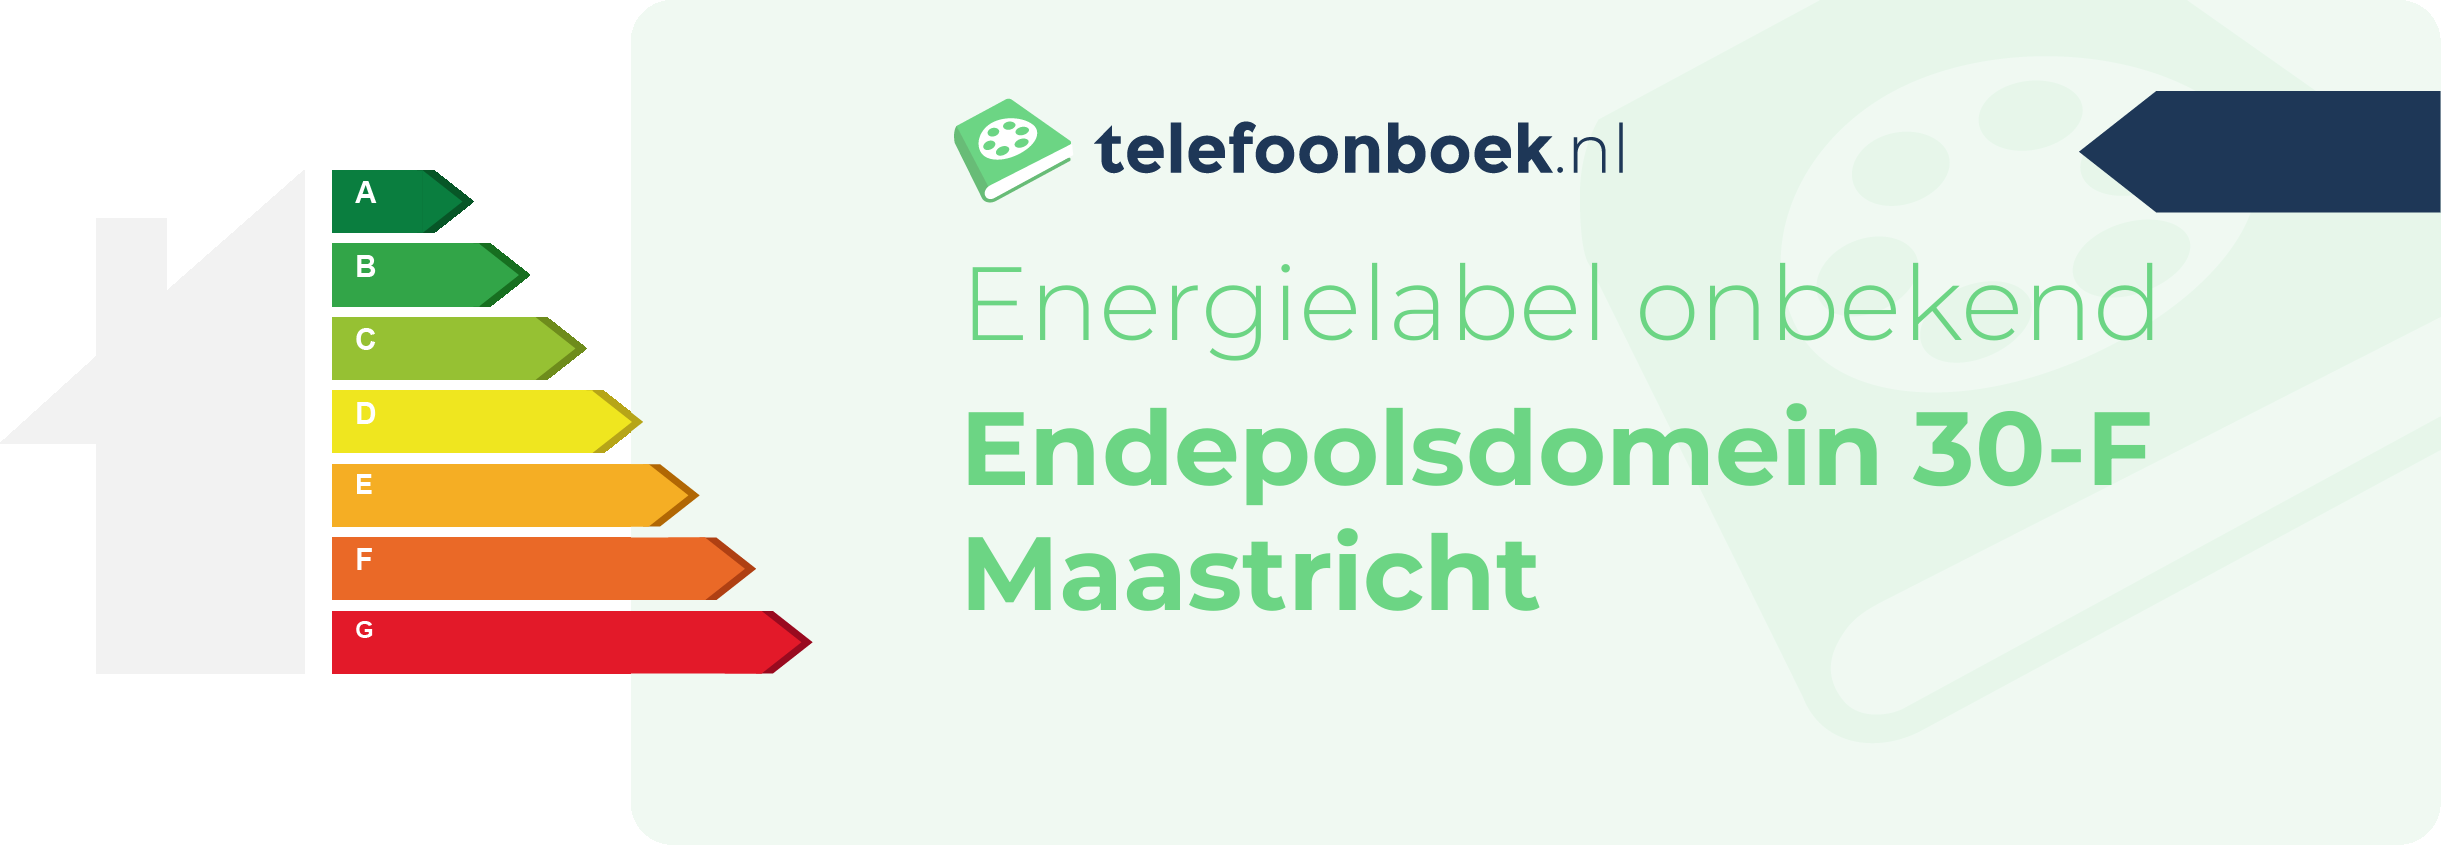 Energielabel Endepolsdomein 30-F Maastricht